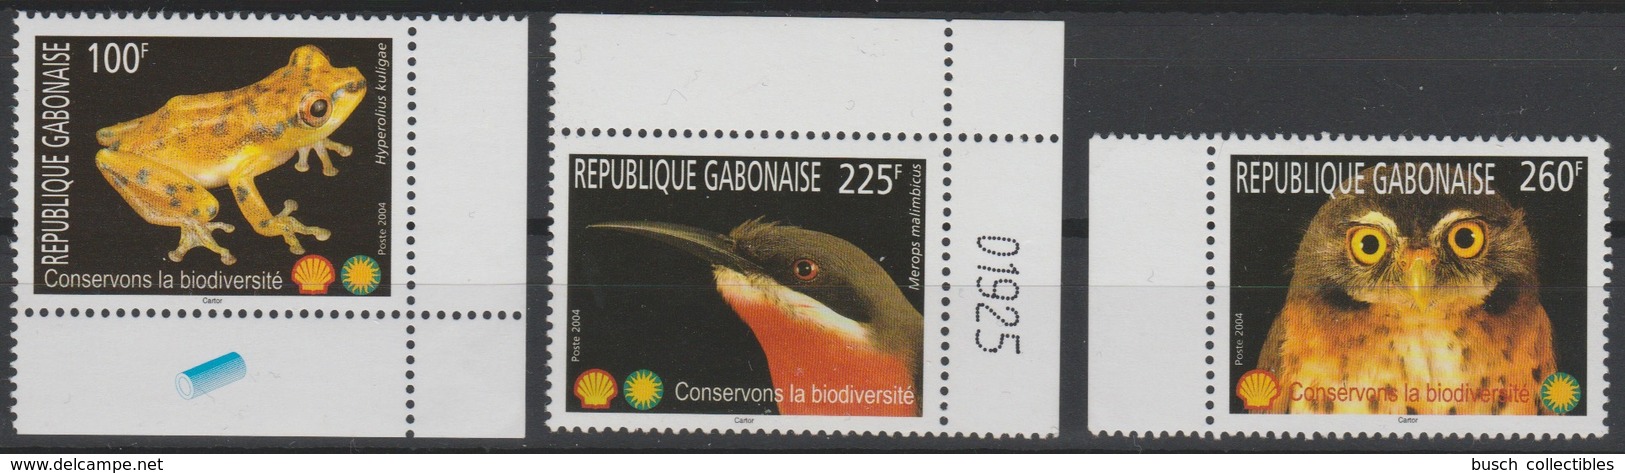 Gabon Gabun 2004 Mi. 1673 1675 1676 Conservons La Biodiversité Faune Fauna Bird Owl Reptile ULTRA Scarce  MNH** - Owls